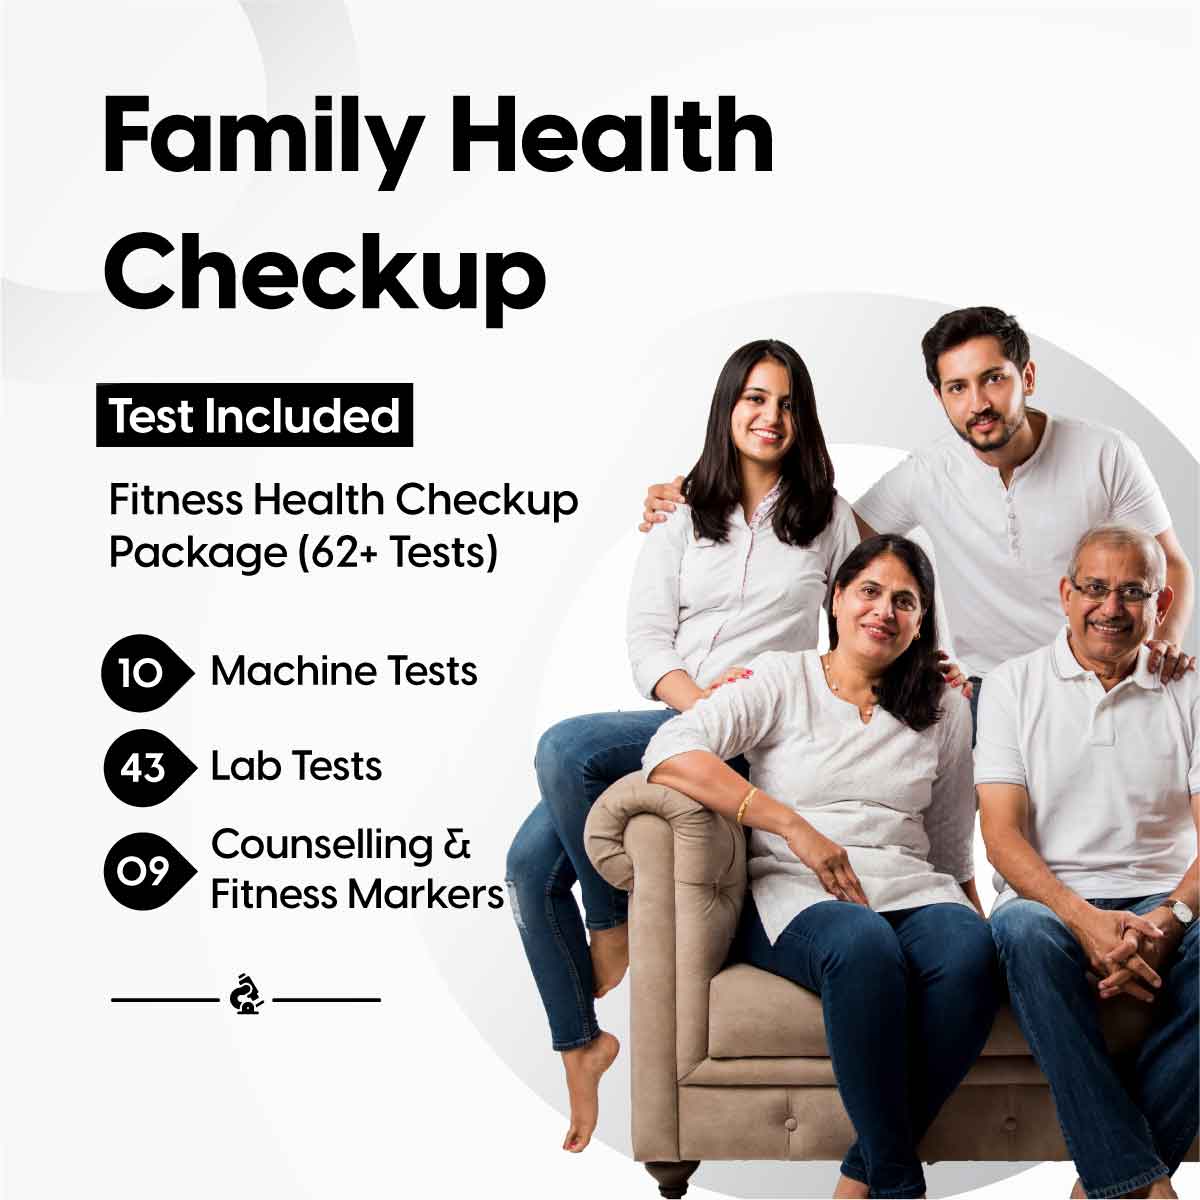 Family Health Checkup